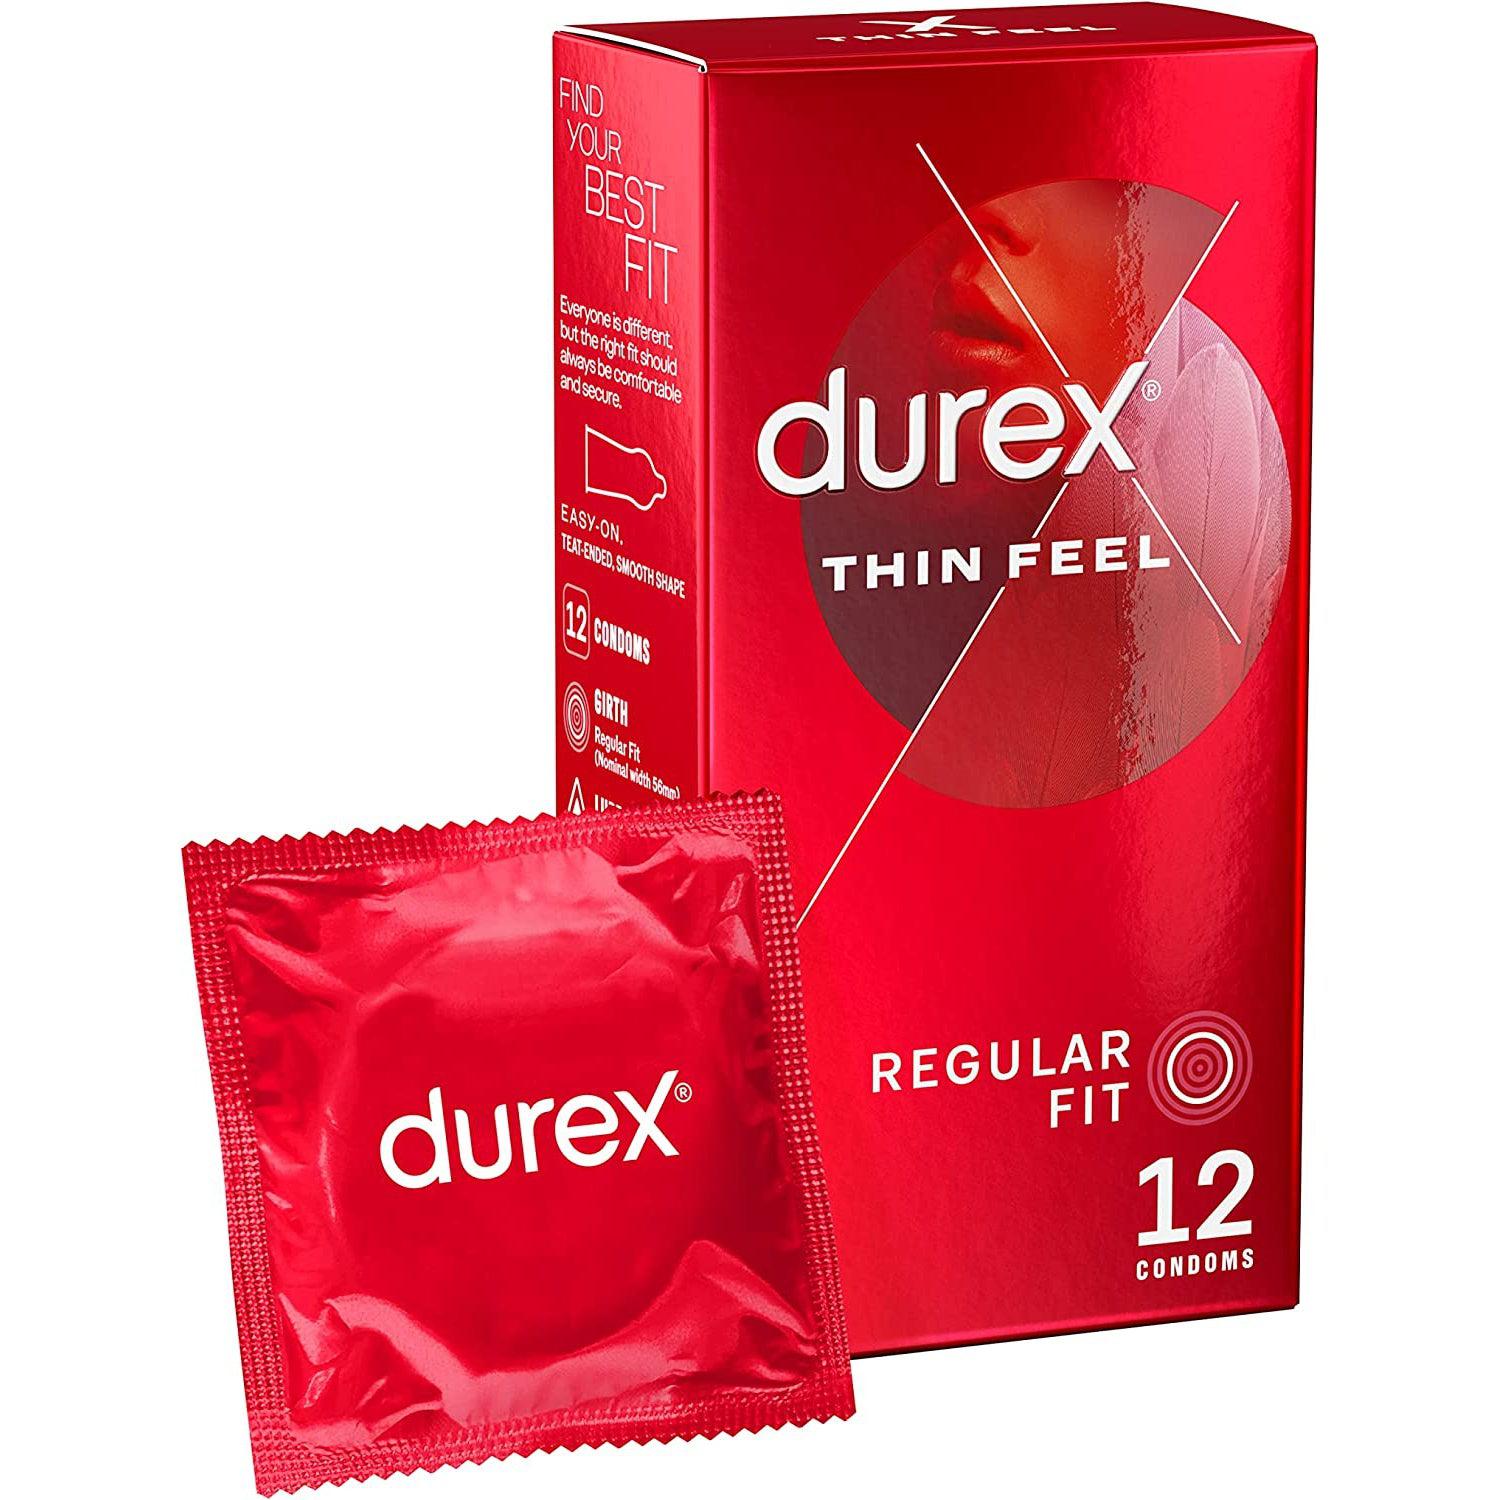 Durex Thin Feel Condoms, Pack of 12